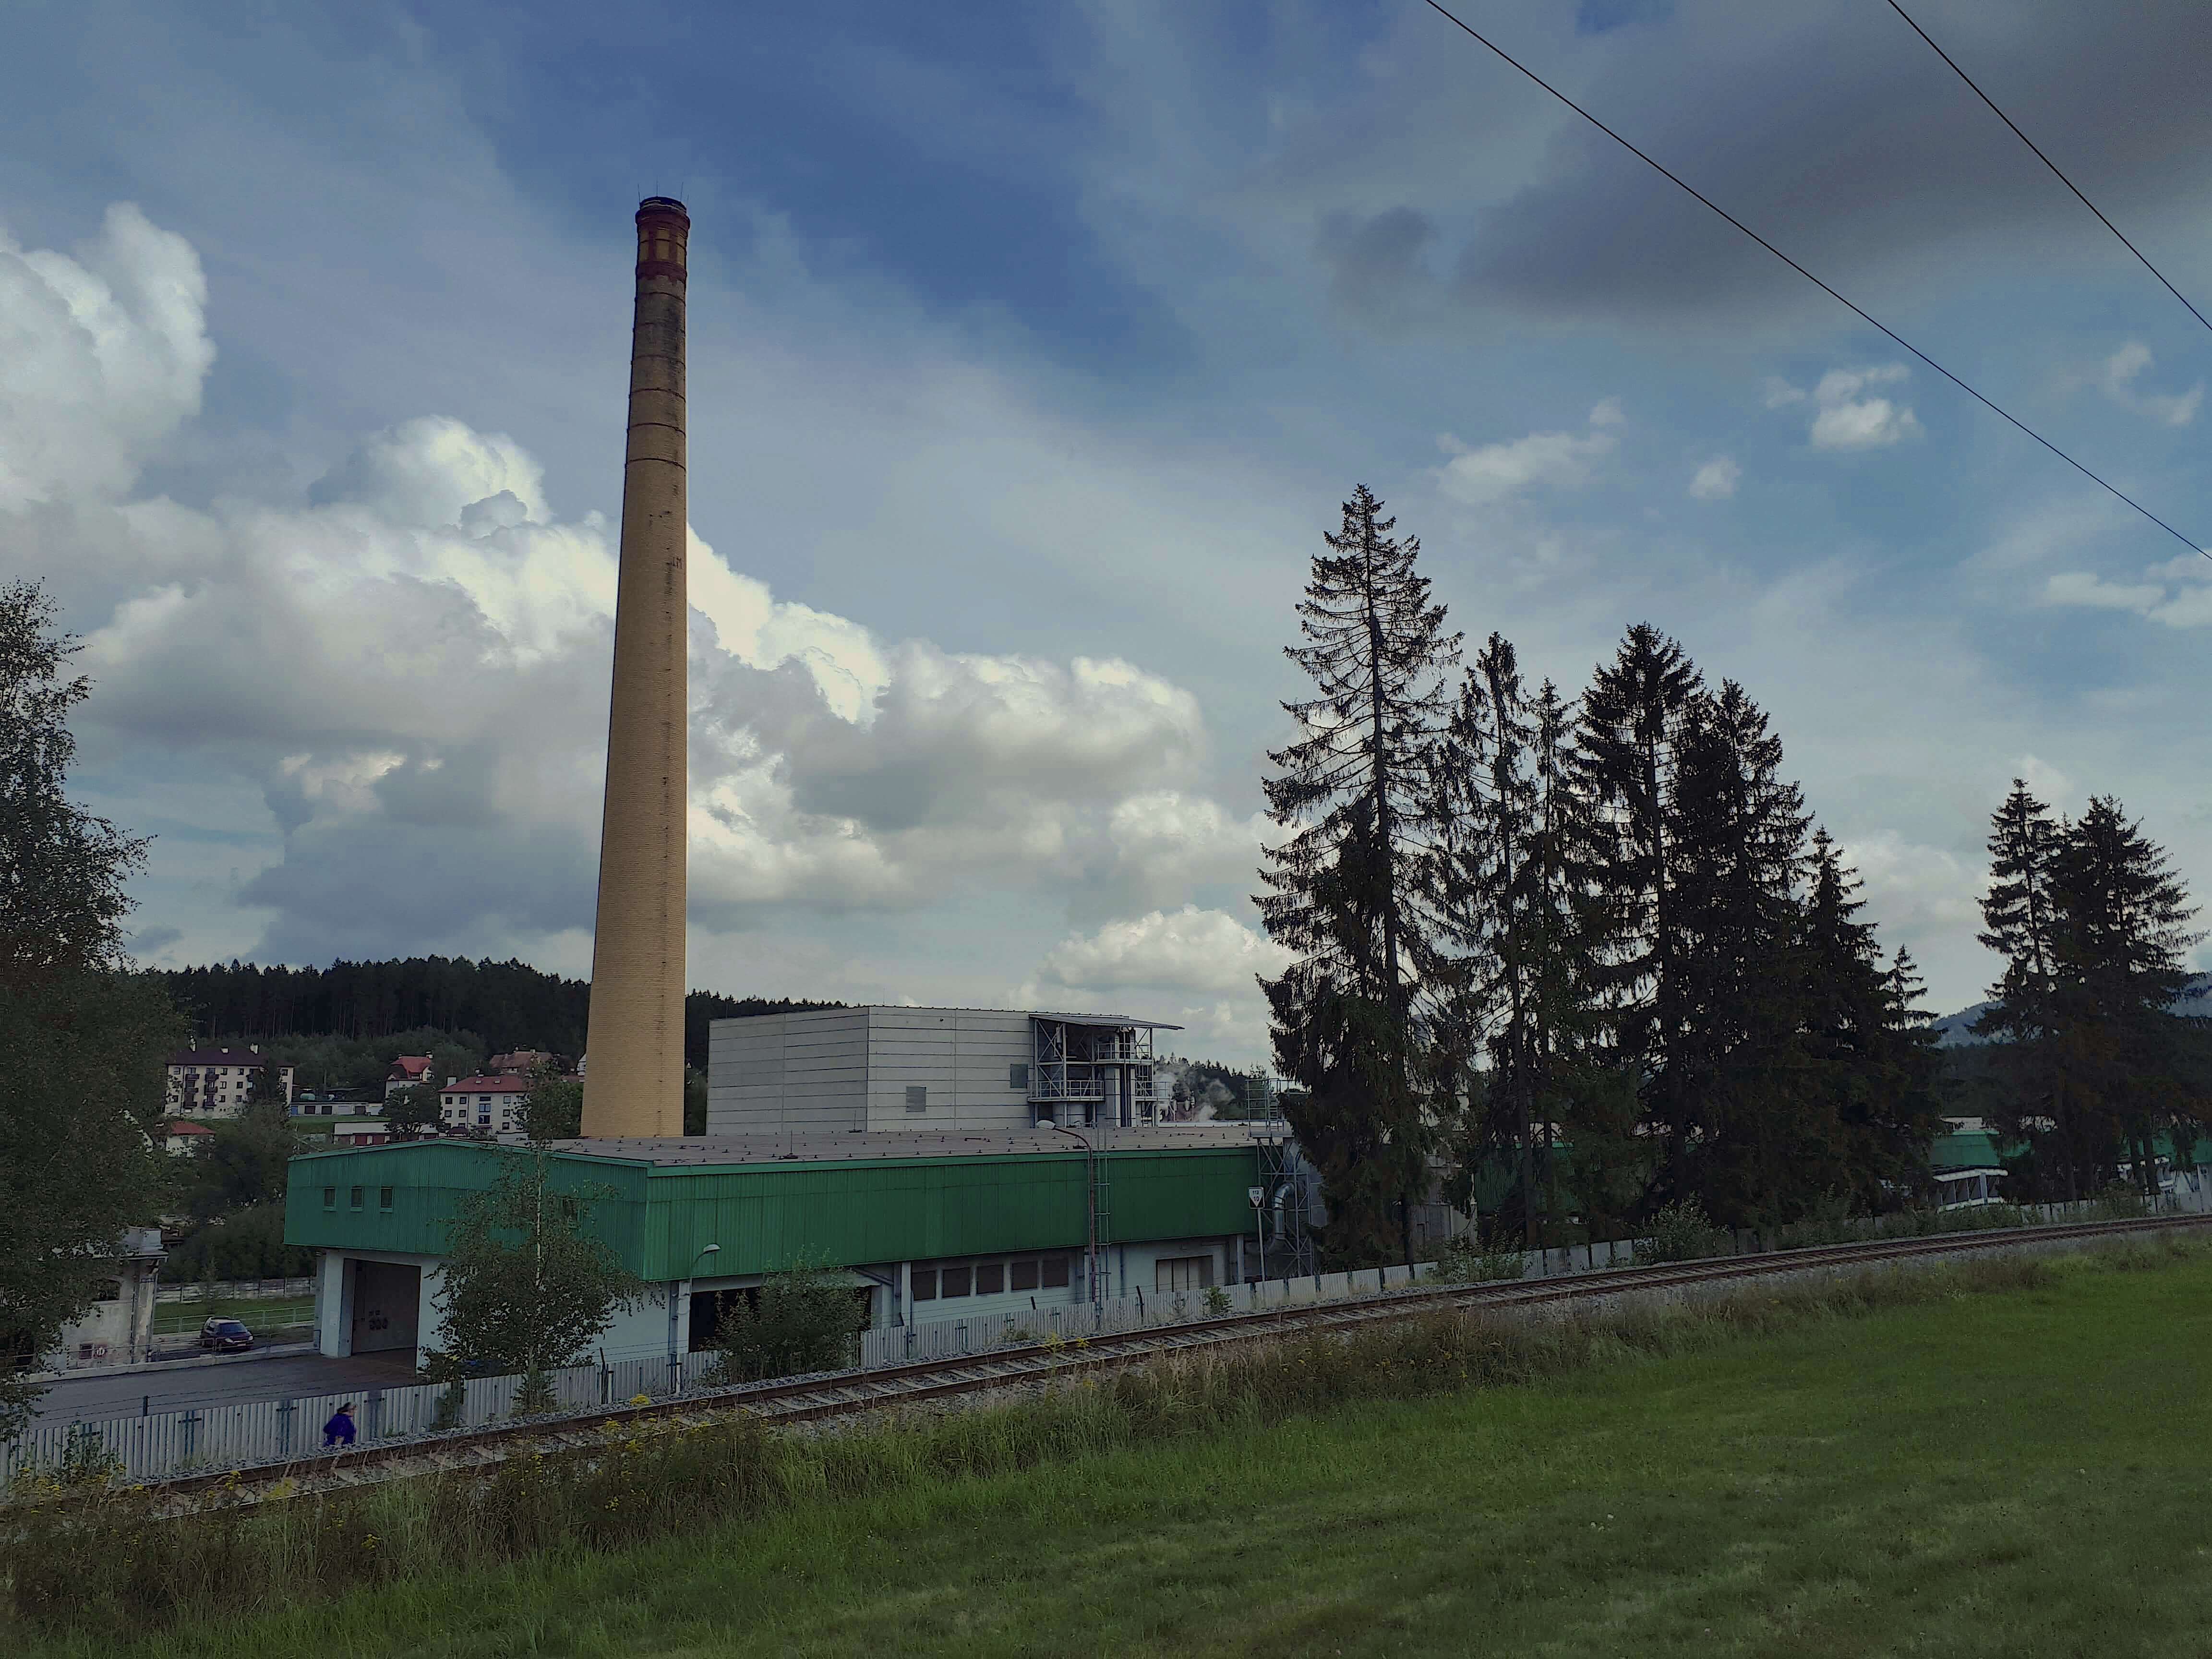 Energy financial group vstoupila do elektrárny na biomasu Mostek